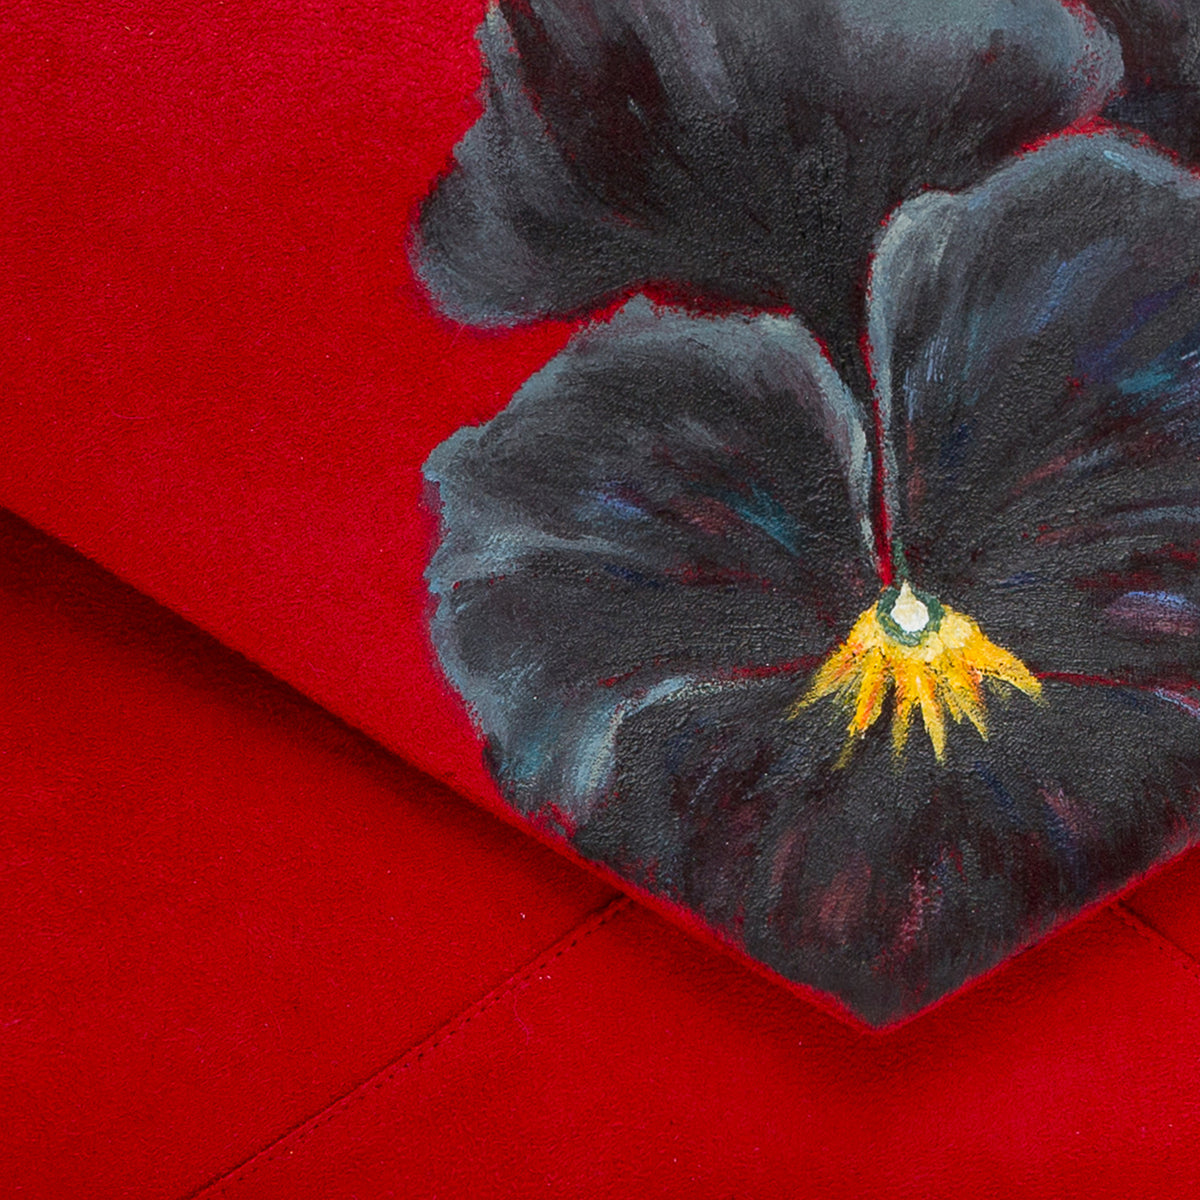 Black Pansies-painted Suede Leather Red Envelope Clutch